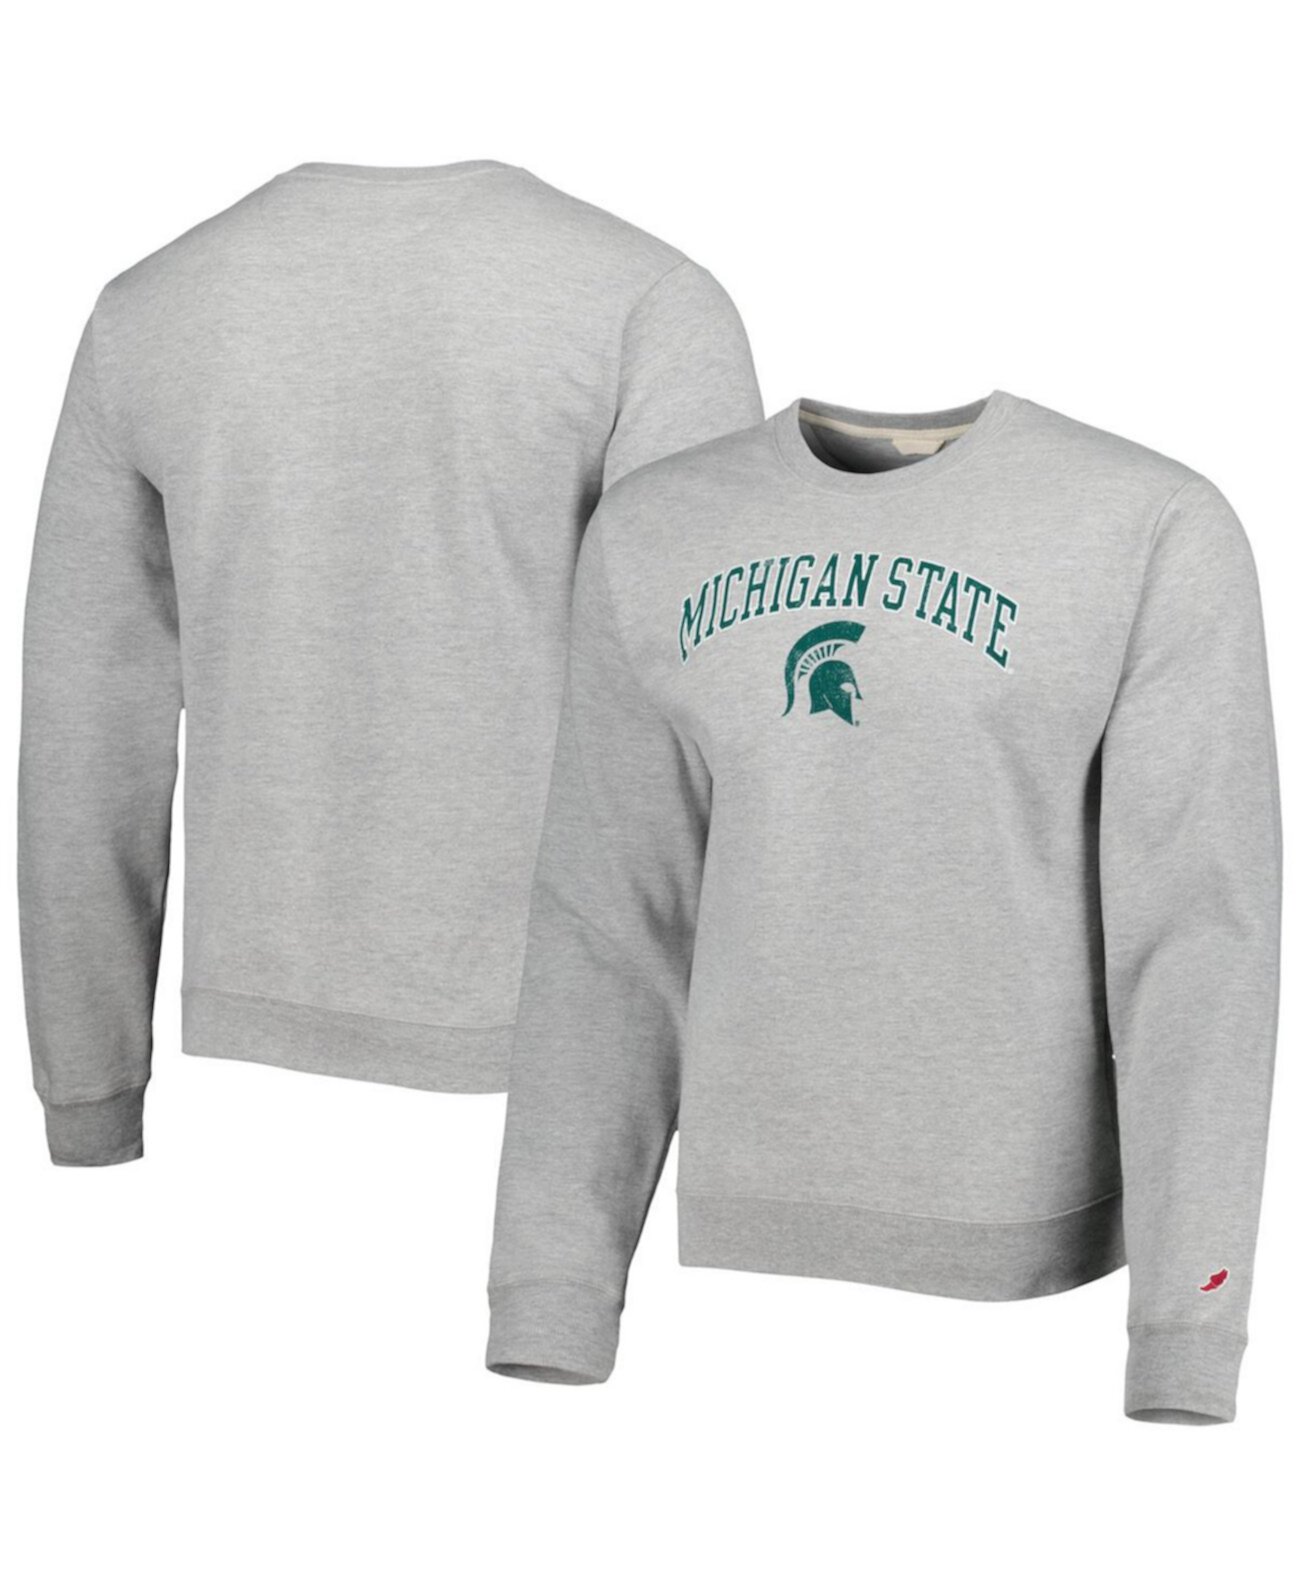 Мужской свитер с логотипом Michigan State Spartans 1965 League Collegiate Wear League Collegiate Wear